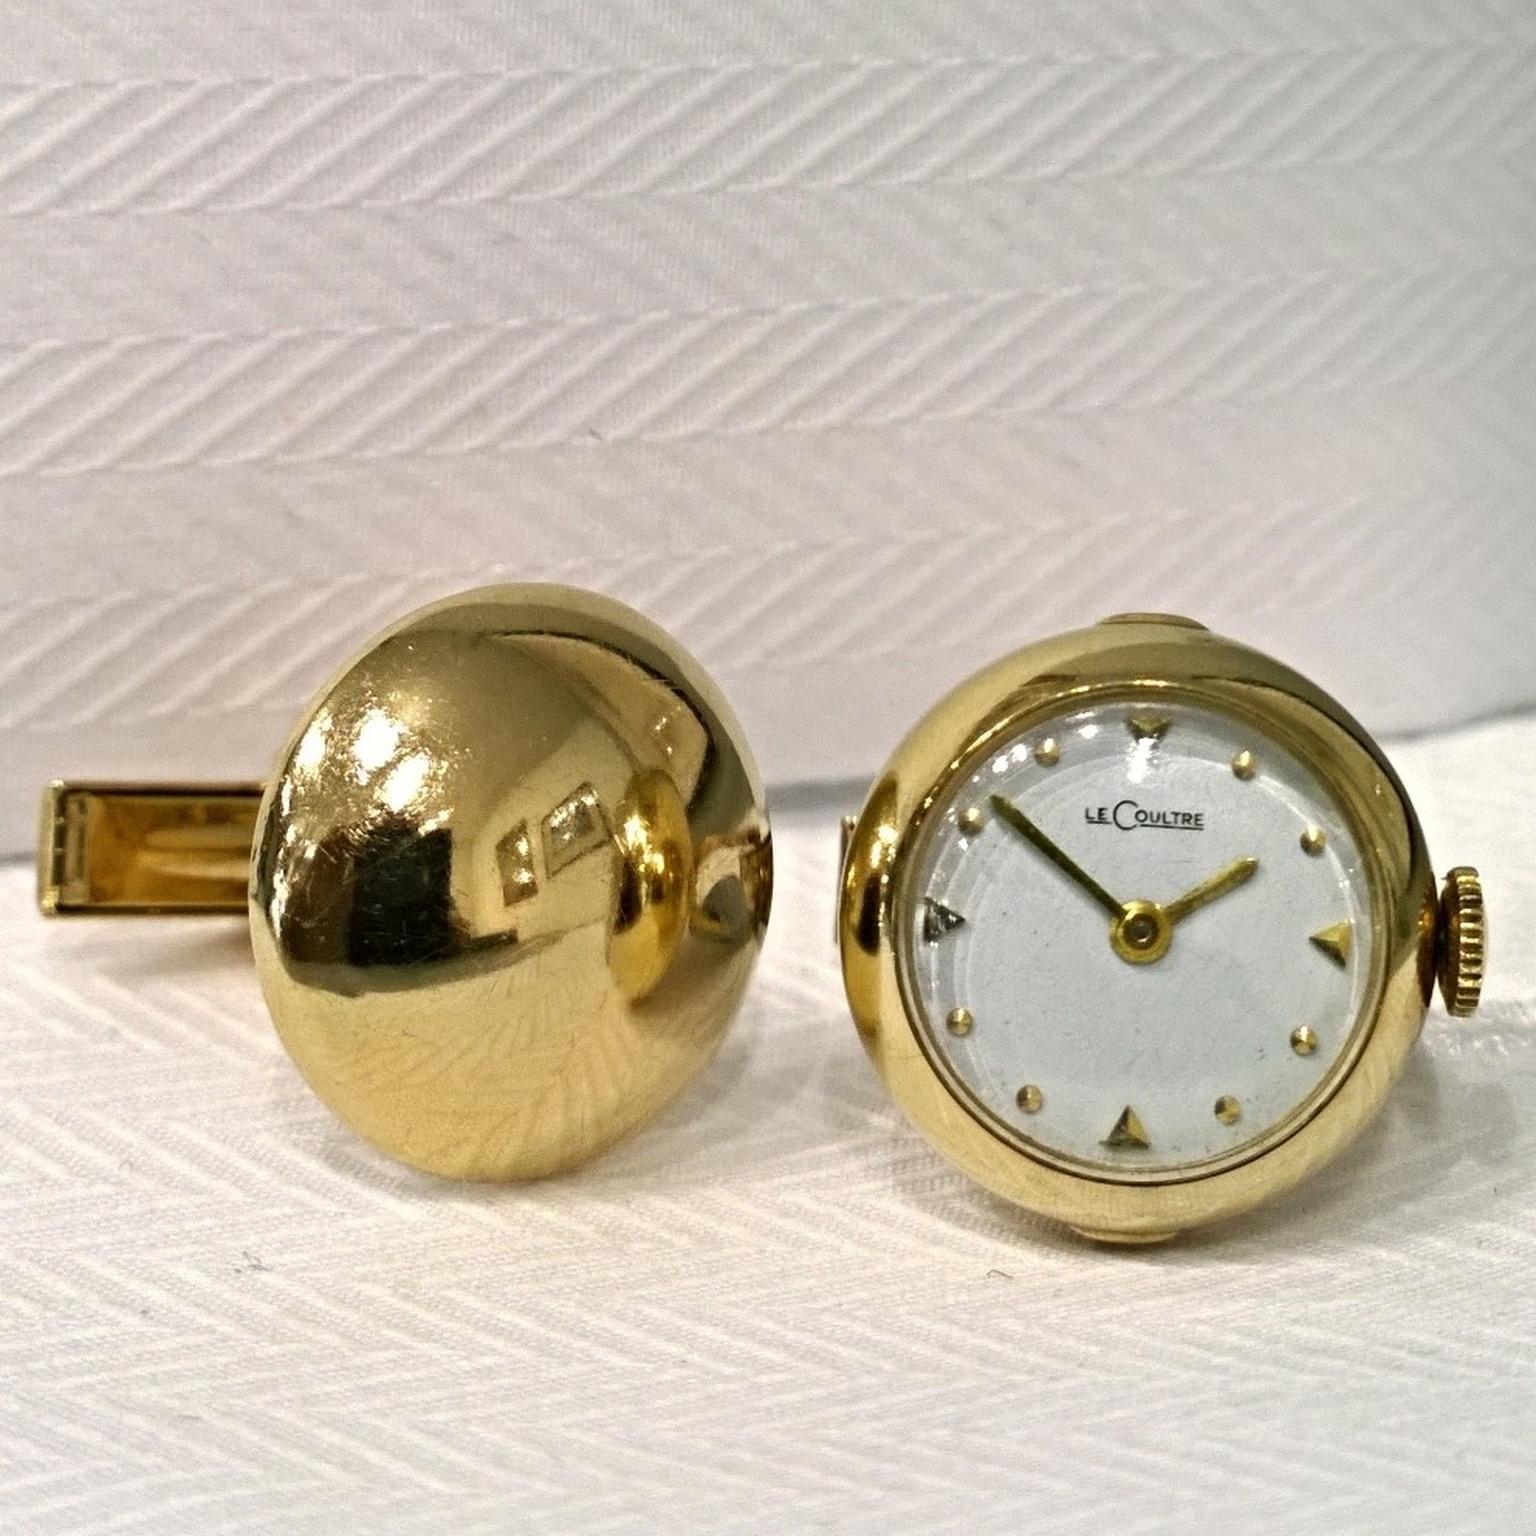 Jaeger LeCoultre vintage cufflink watches